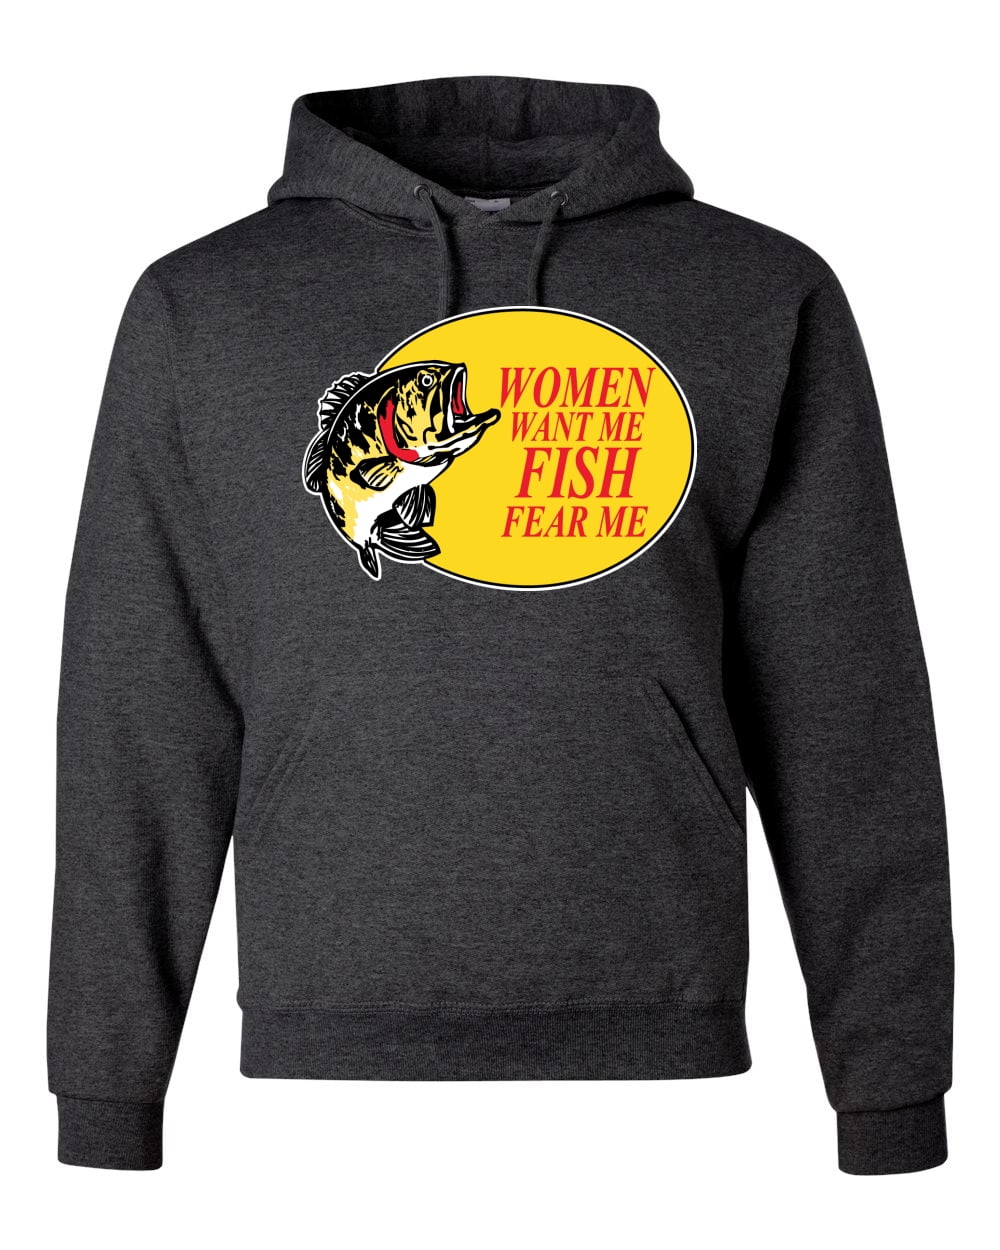 Women Want Me Fish Fear Me Fishing Unisex Graphic Hoodie Sweatshirt, Black,  Medium 